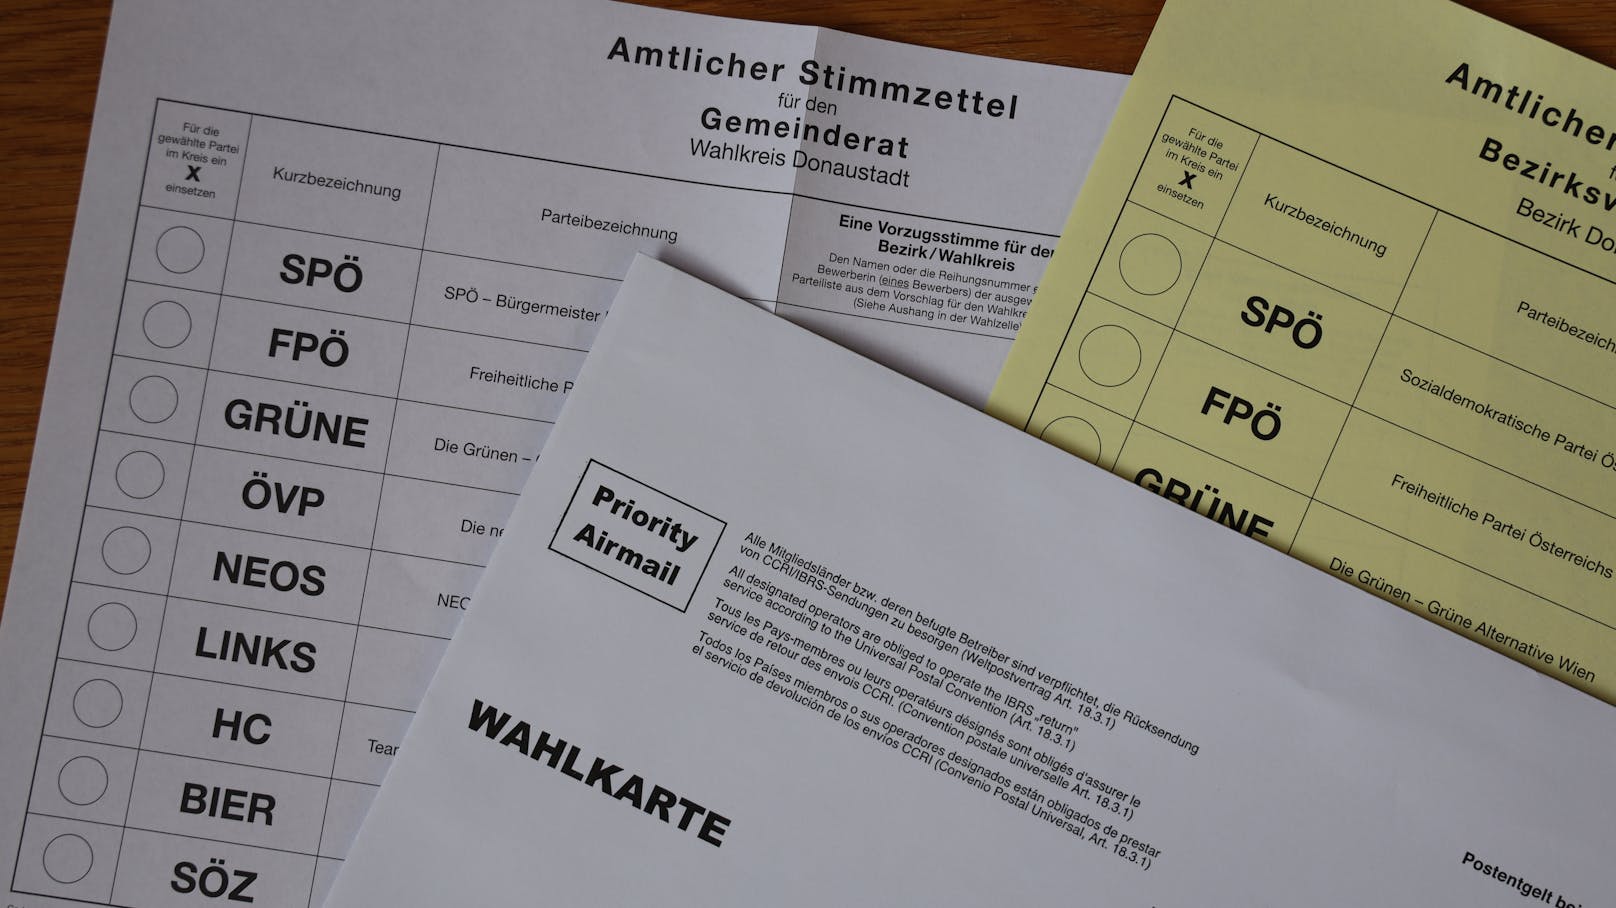 Wahlkarte für die Wien-Wahl